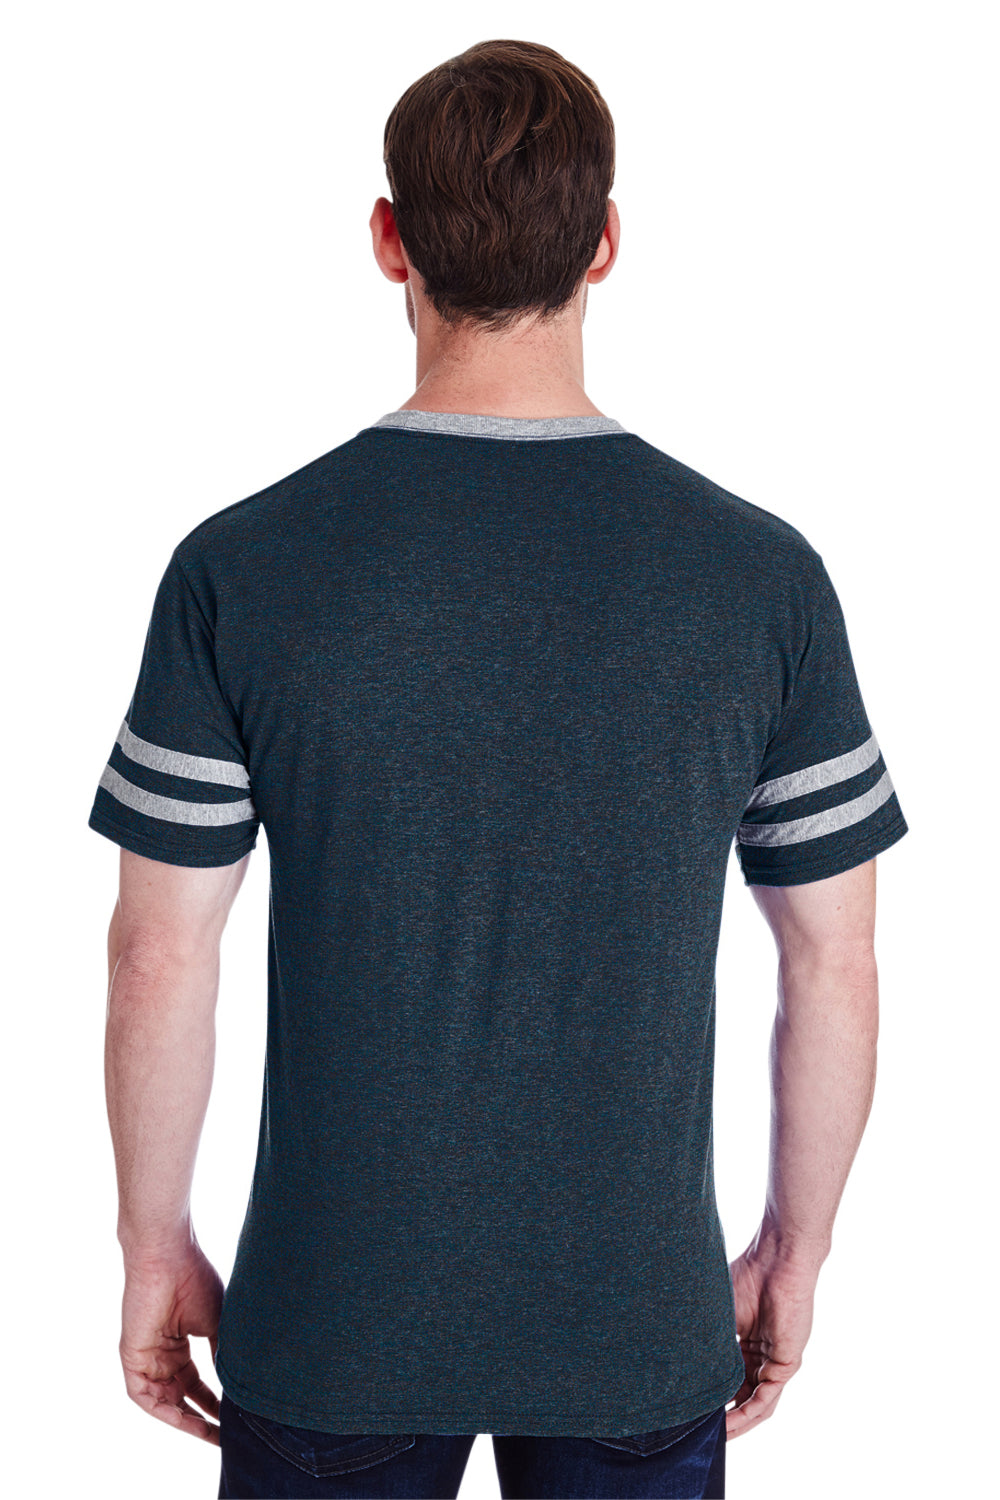 Jerzees 602MR Mens Varsity Ringer Short Sleeve Crewneck T-Shirt Heather Indigo Blue/Oxford Grey Back